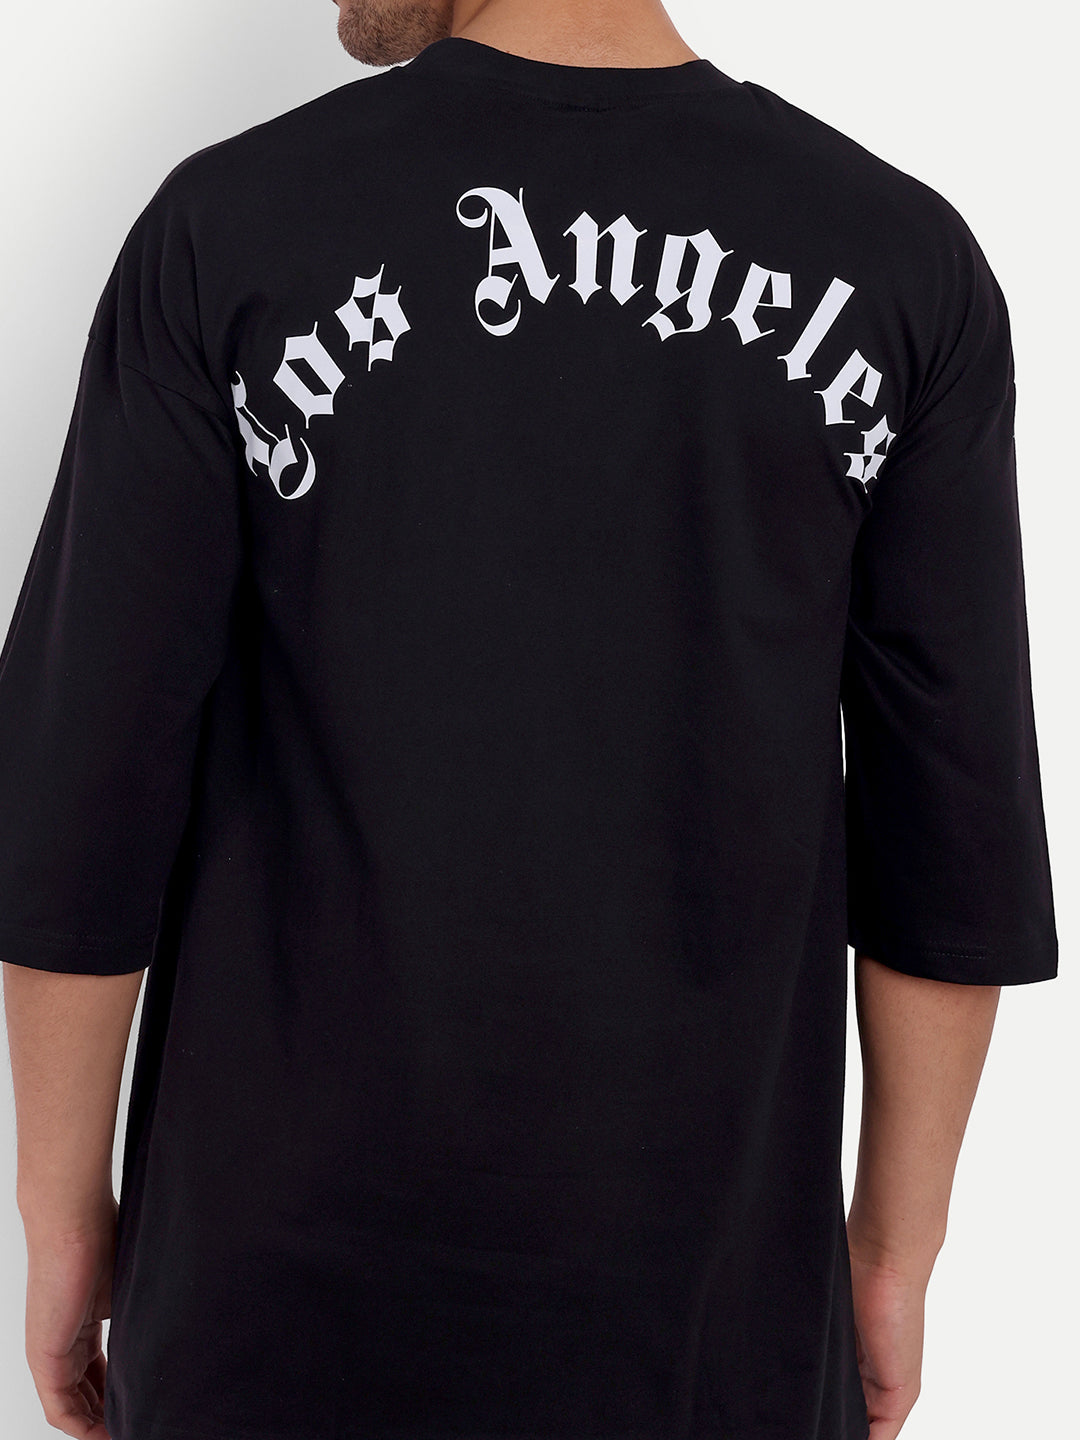 Los Angeles Black Drop-shoulder Oversized Tee by Gavin Paris